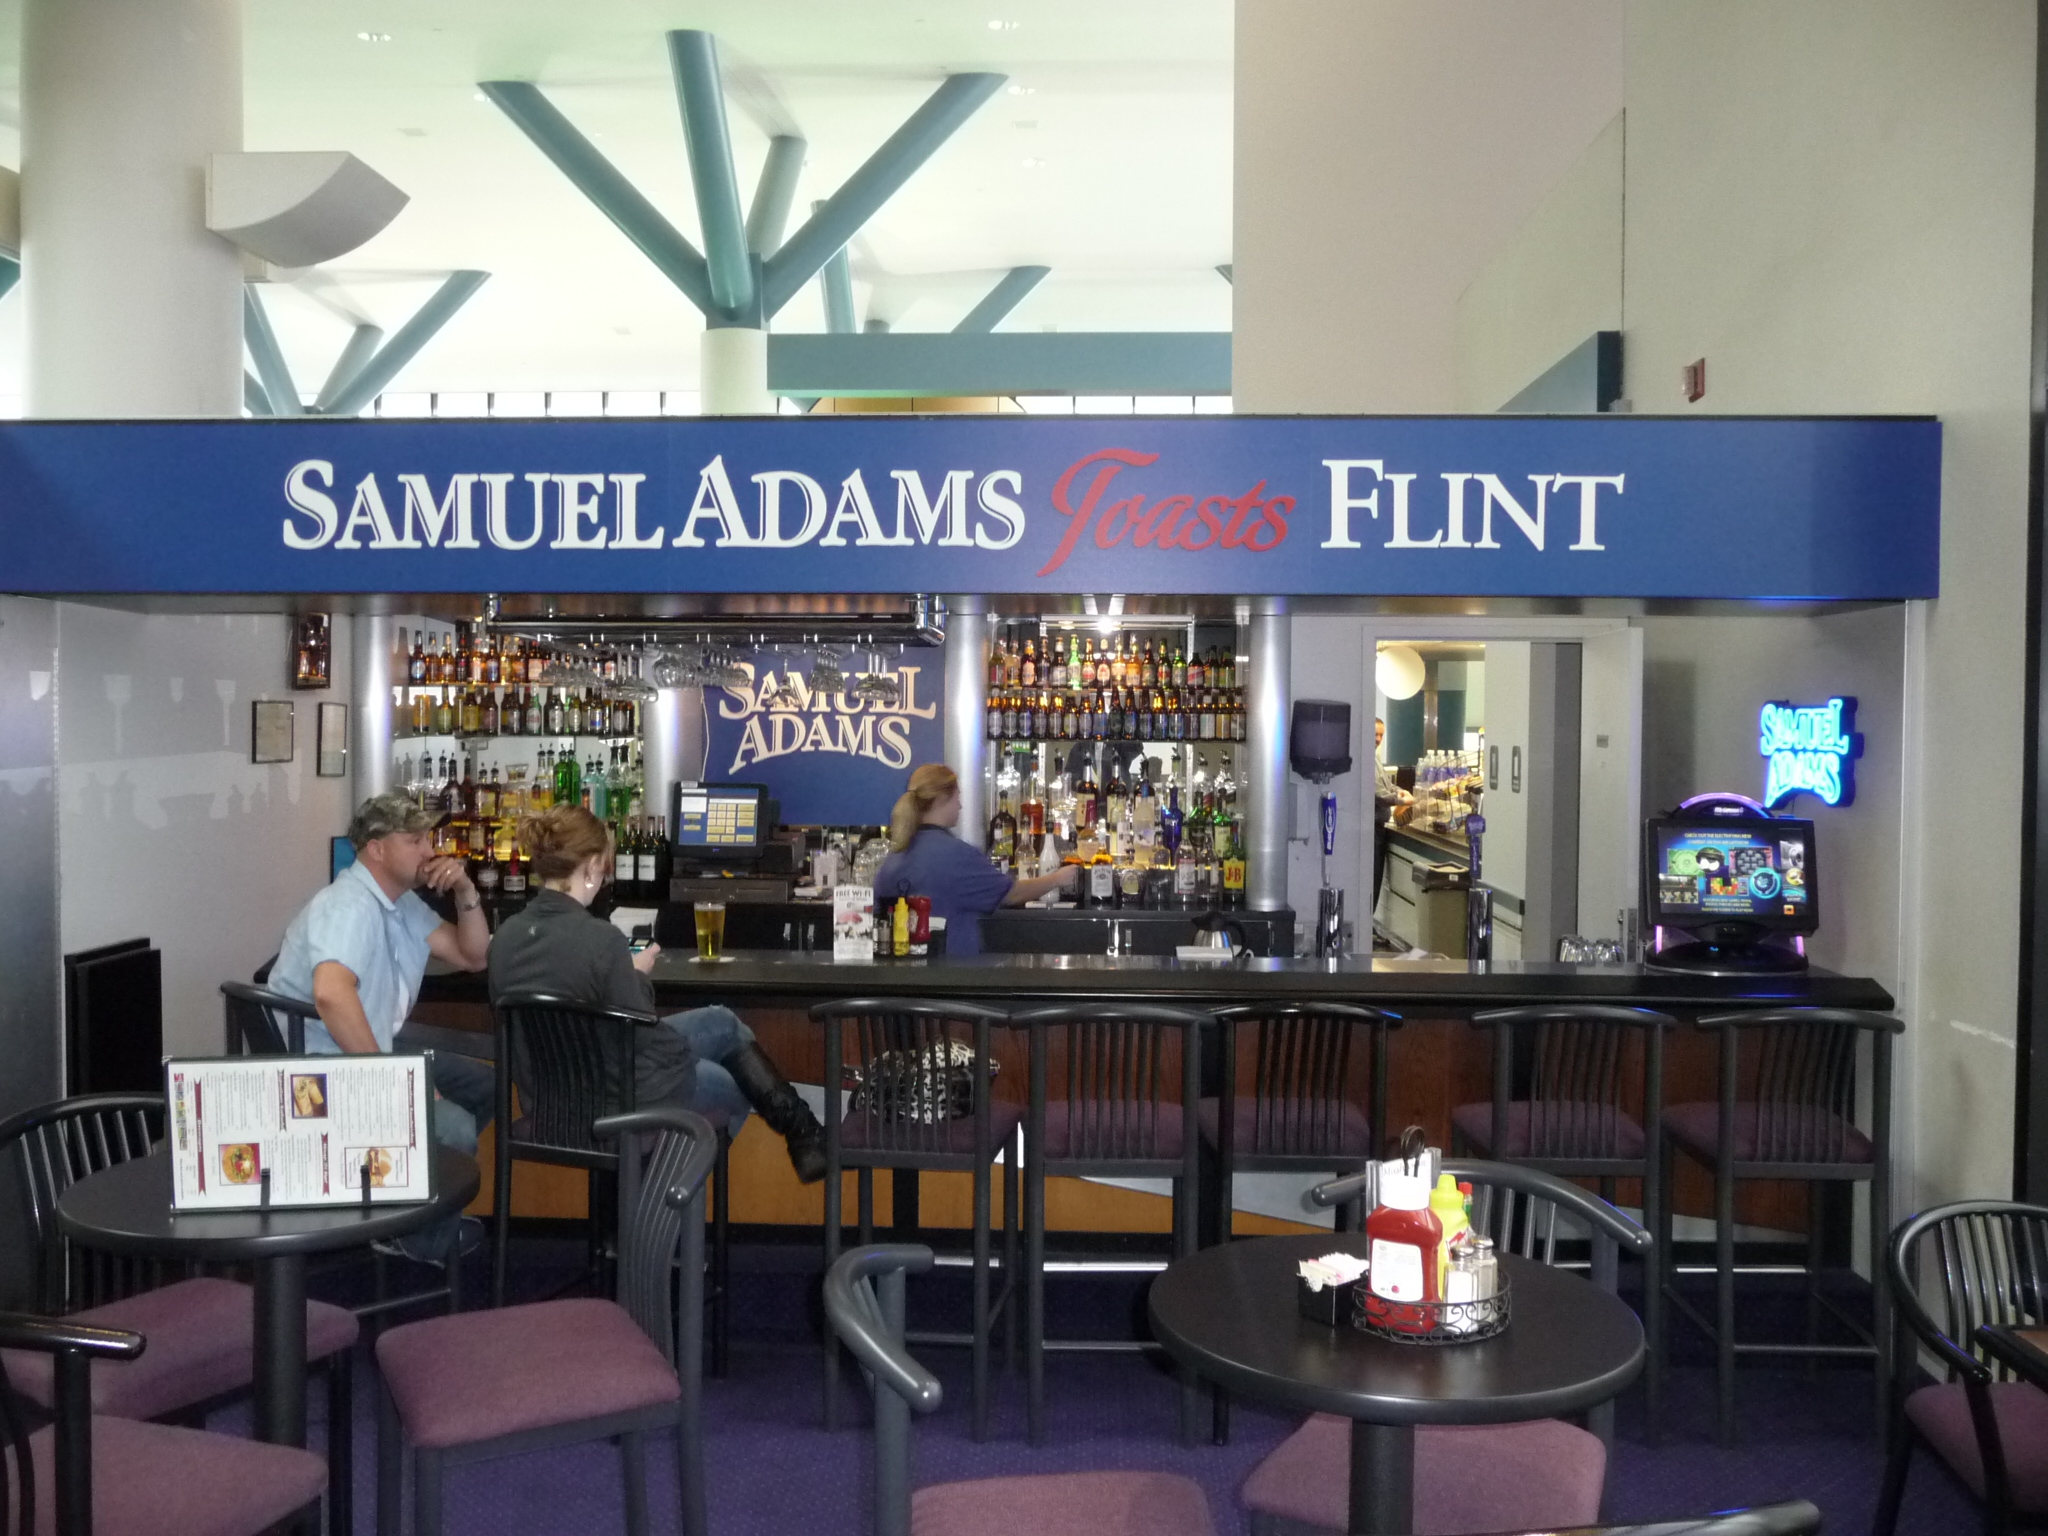 Samuel Adams Flint Airport Signage